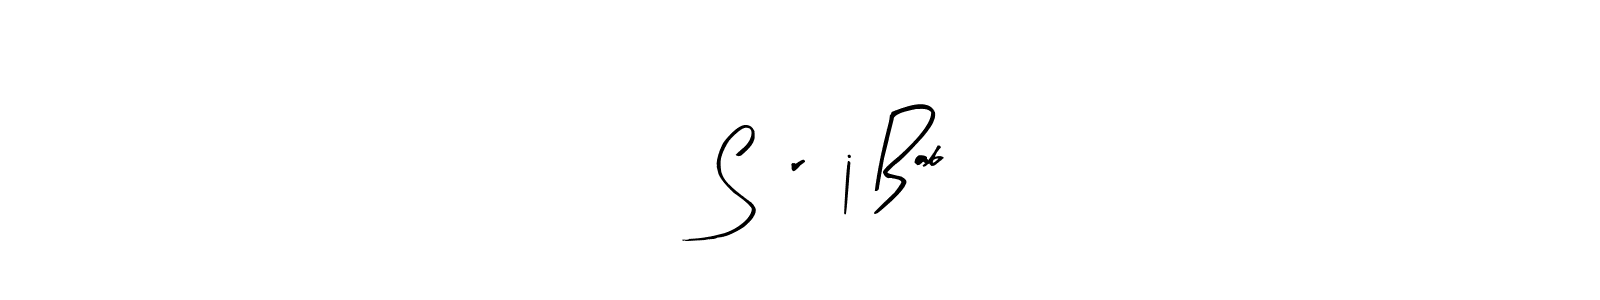 How to make ¥ SûrÁj Babú signature? Arty Signature is a professional autograph style. Create handwritten signature for ¥ SûrÁj Babú name. ¥ SûrÁj Babú signature style 8 images and pictures png